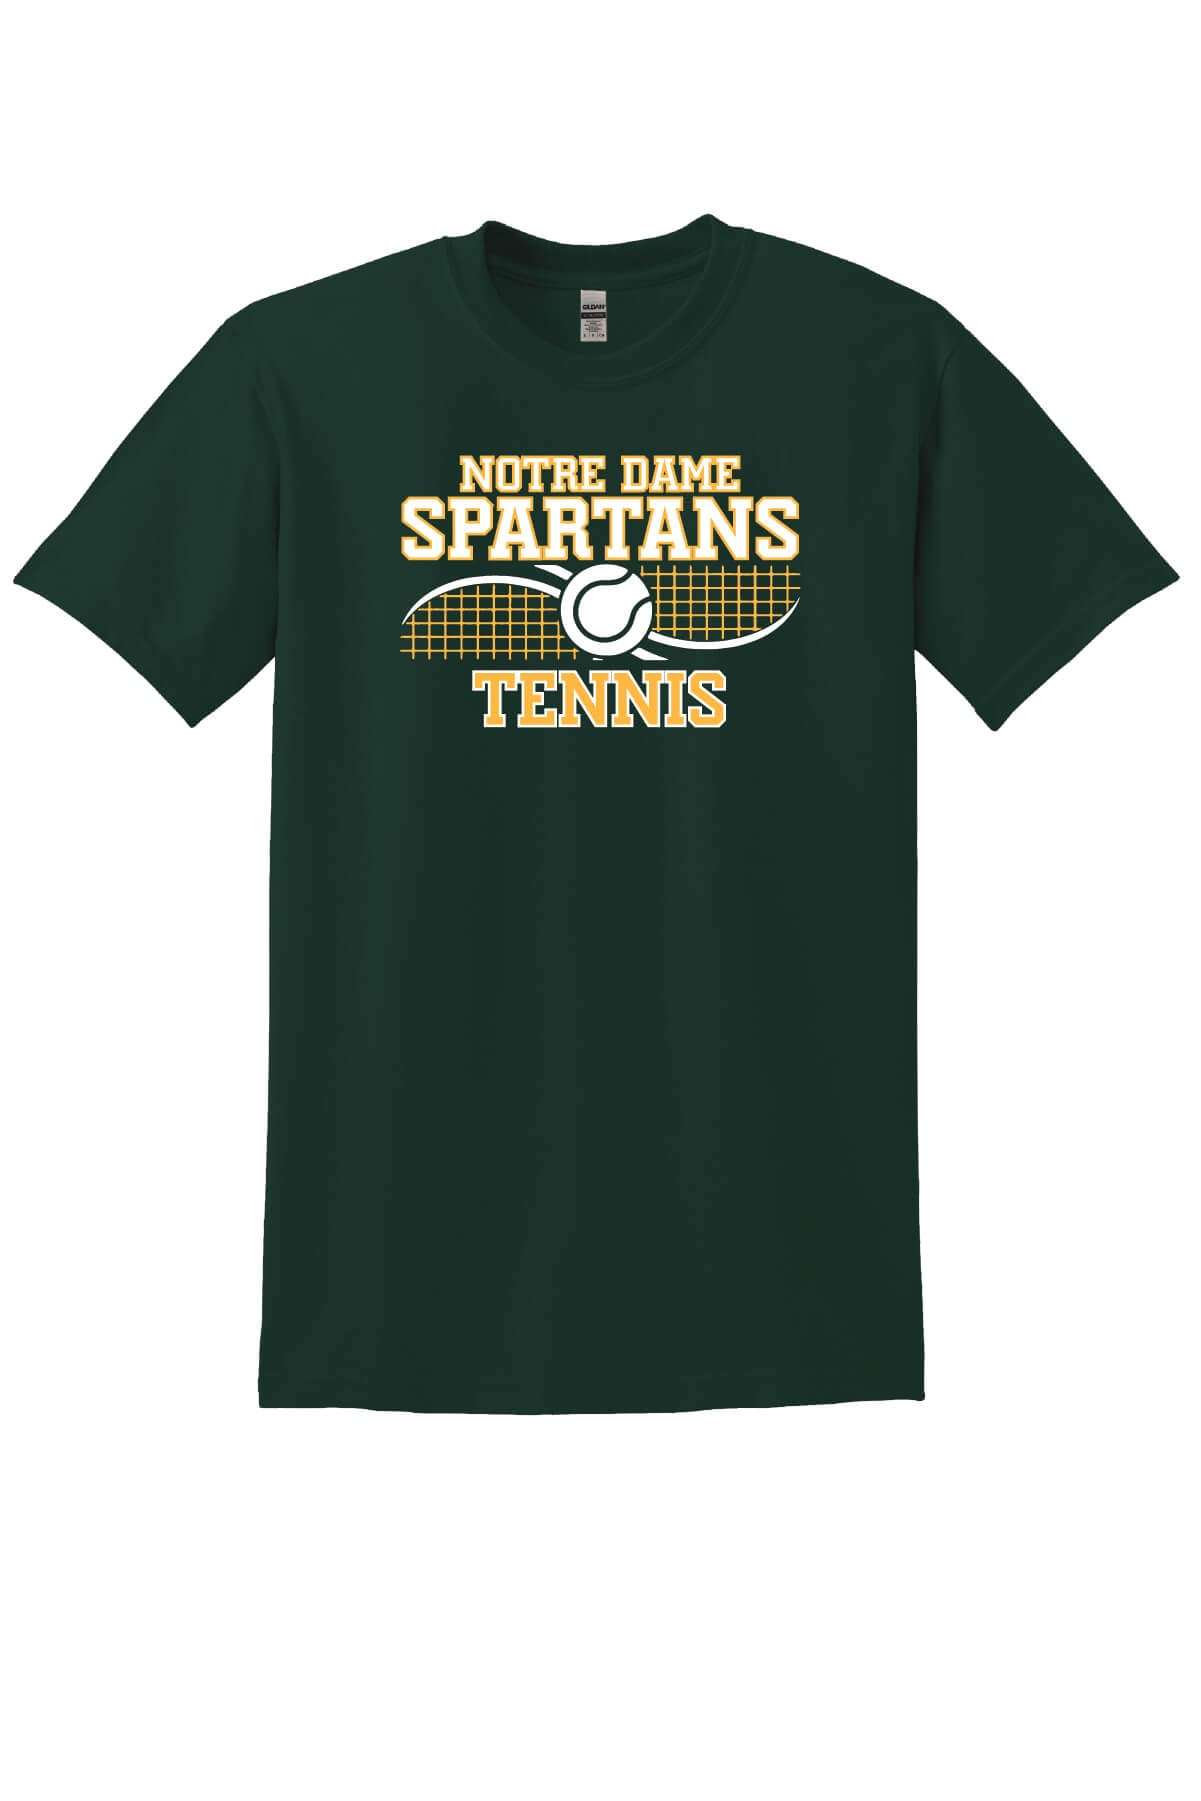 Notre Dame Spartans Short Sleeve T-Shirt green